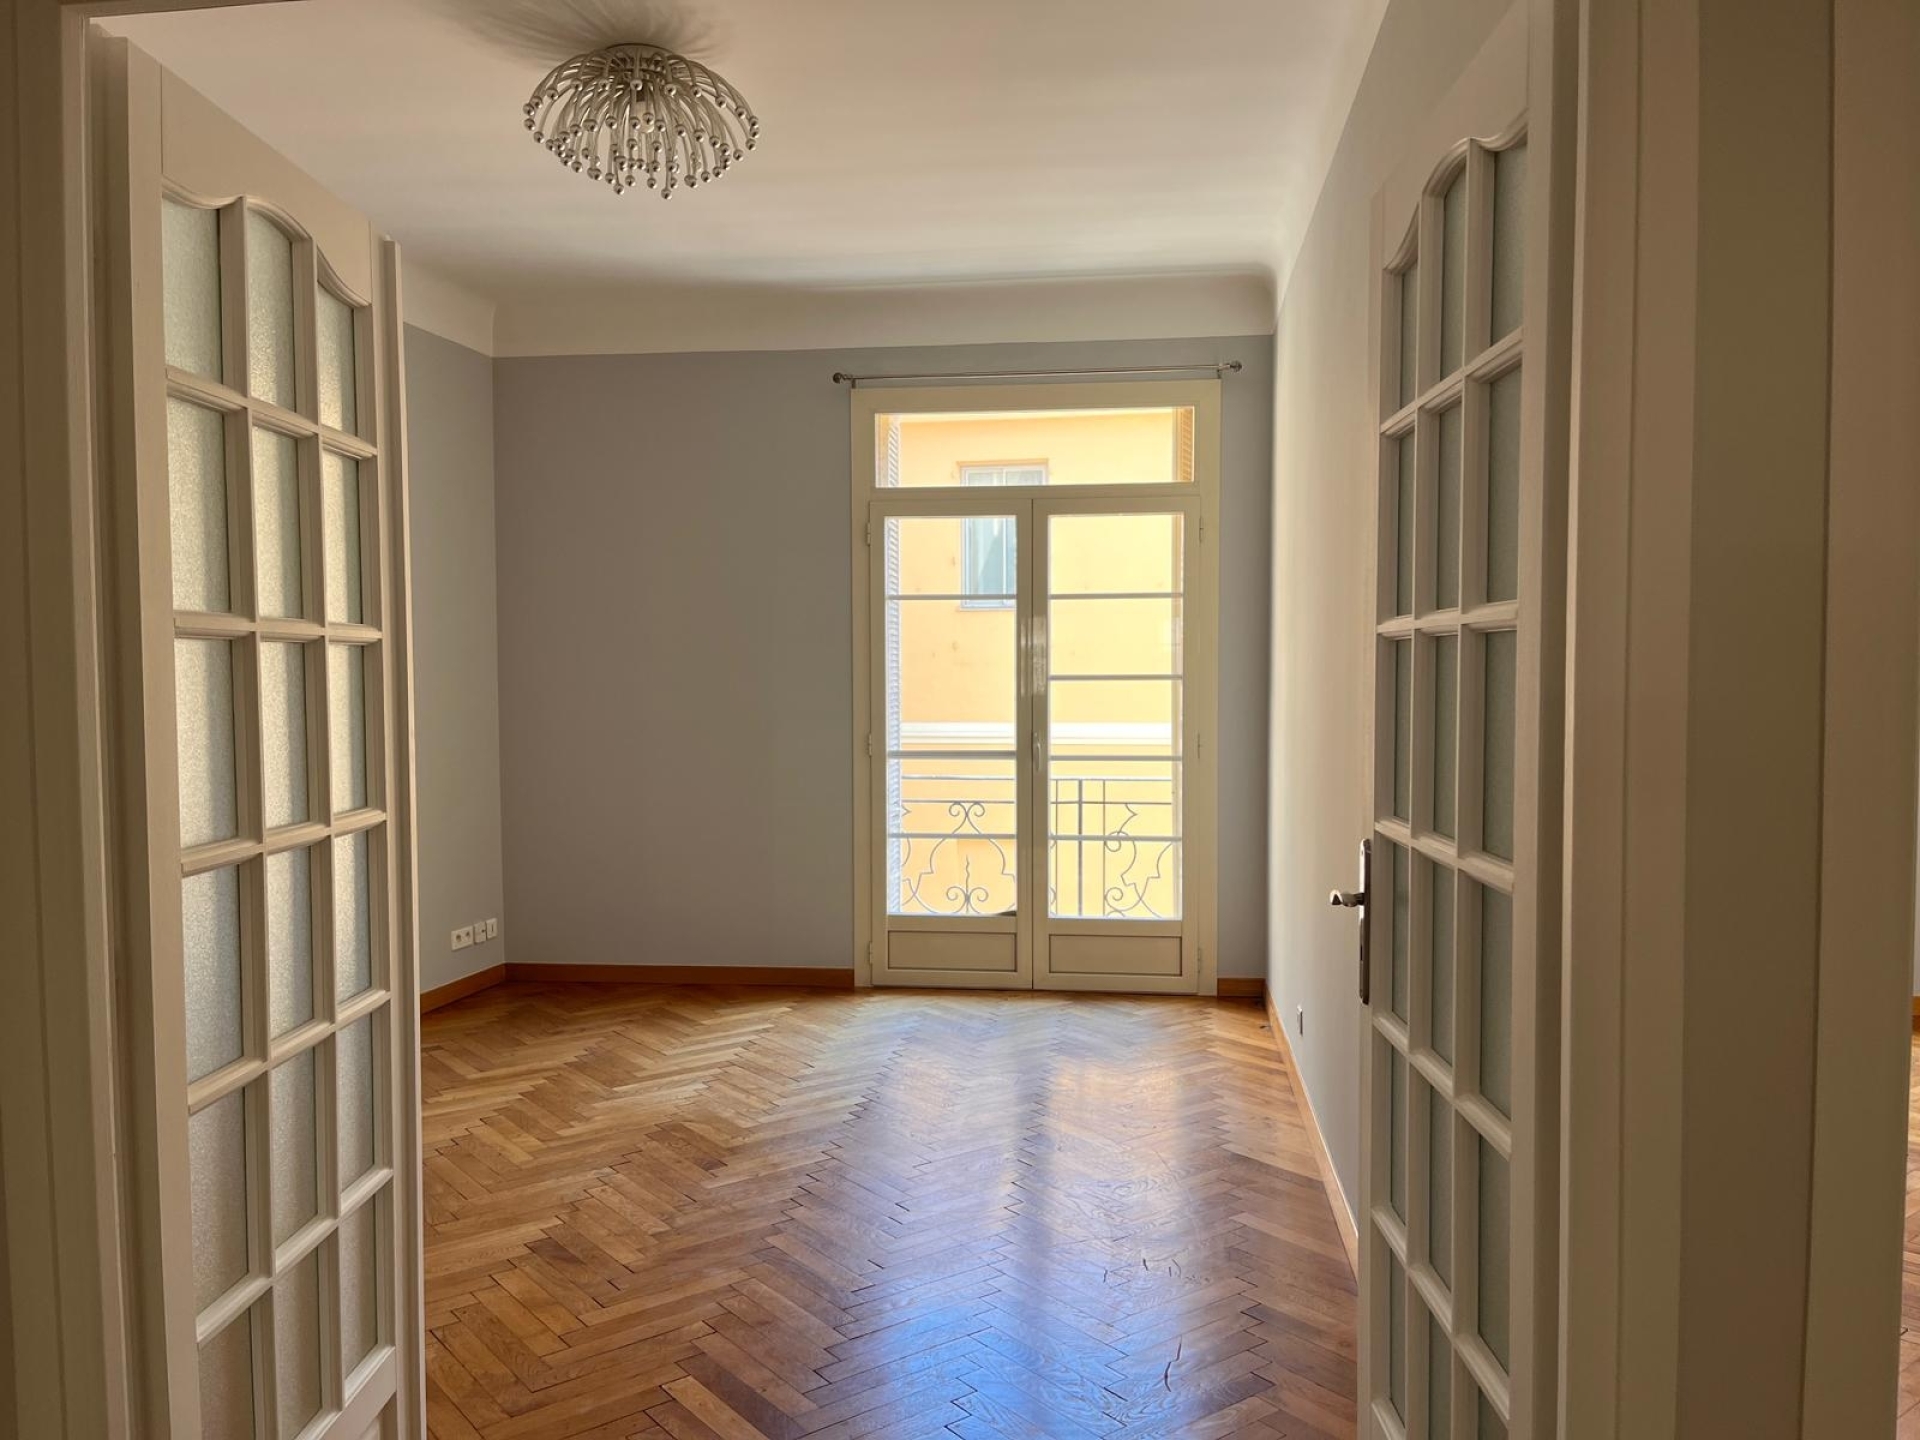 Dotta 2 rooms apartment for rent - GIARDINETTO - Monaco-Ville - Monaco - imgimage00001